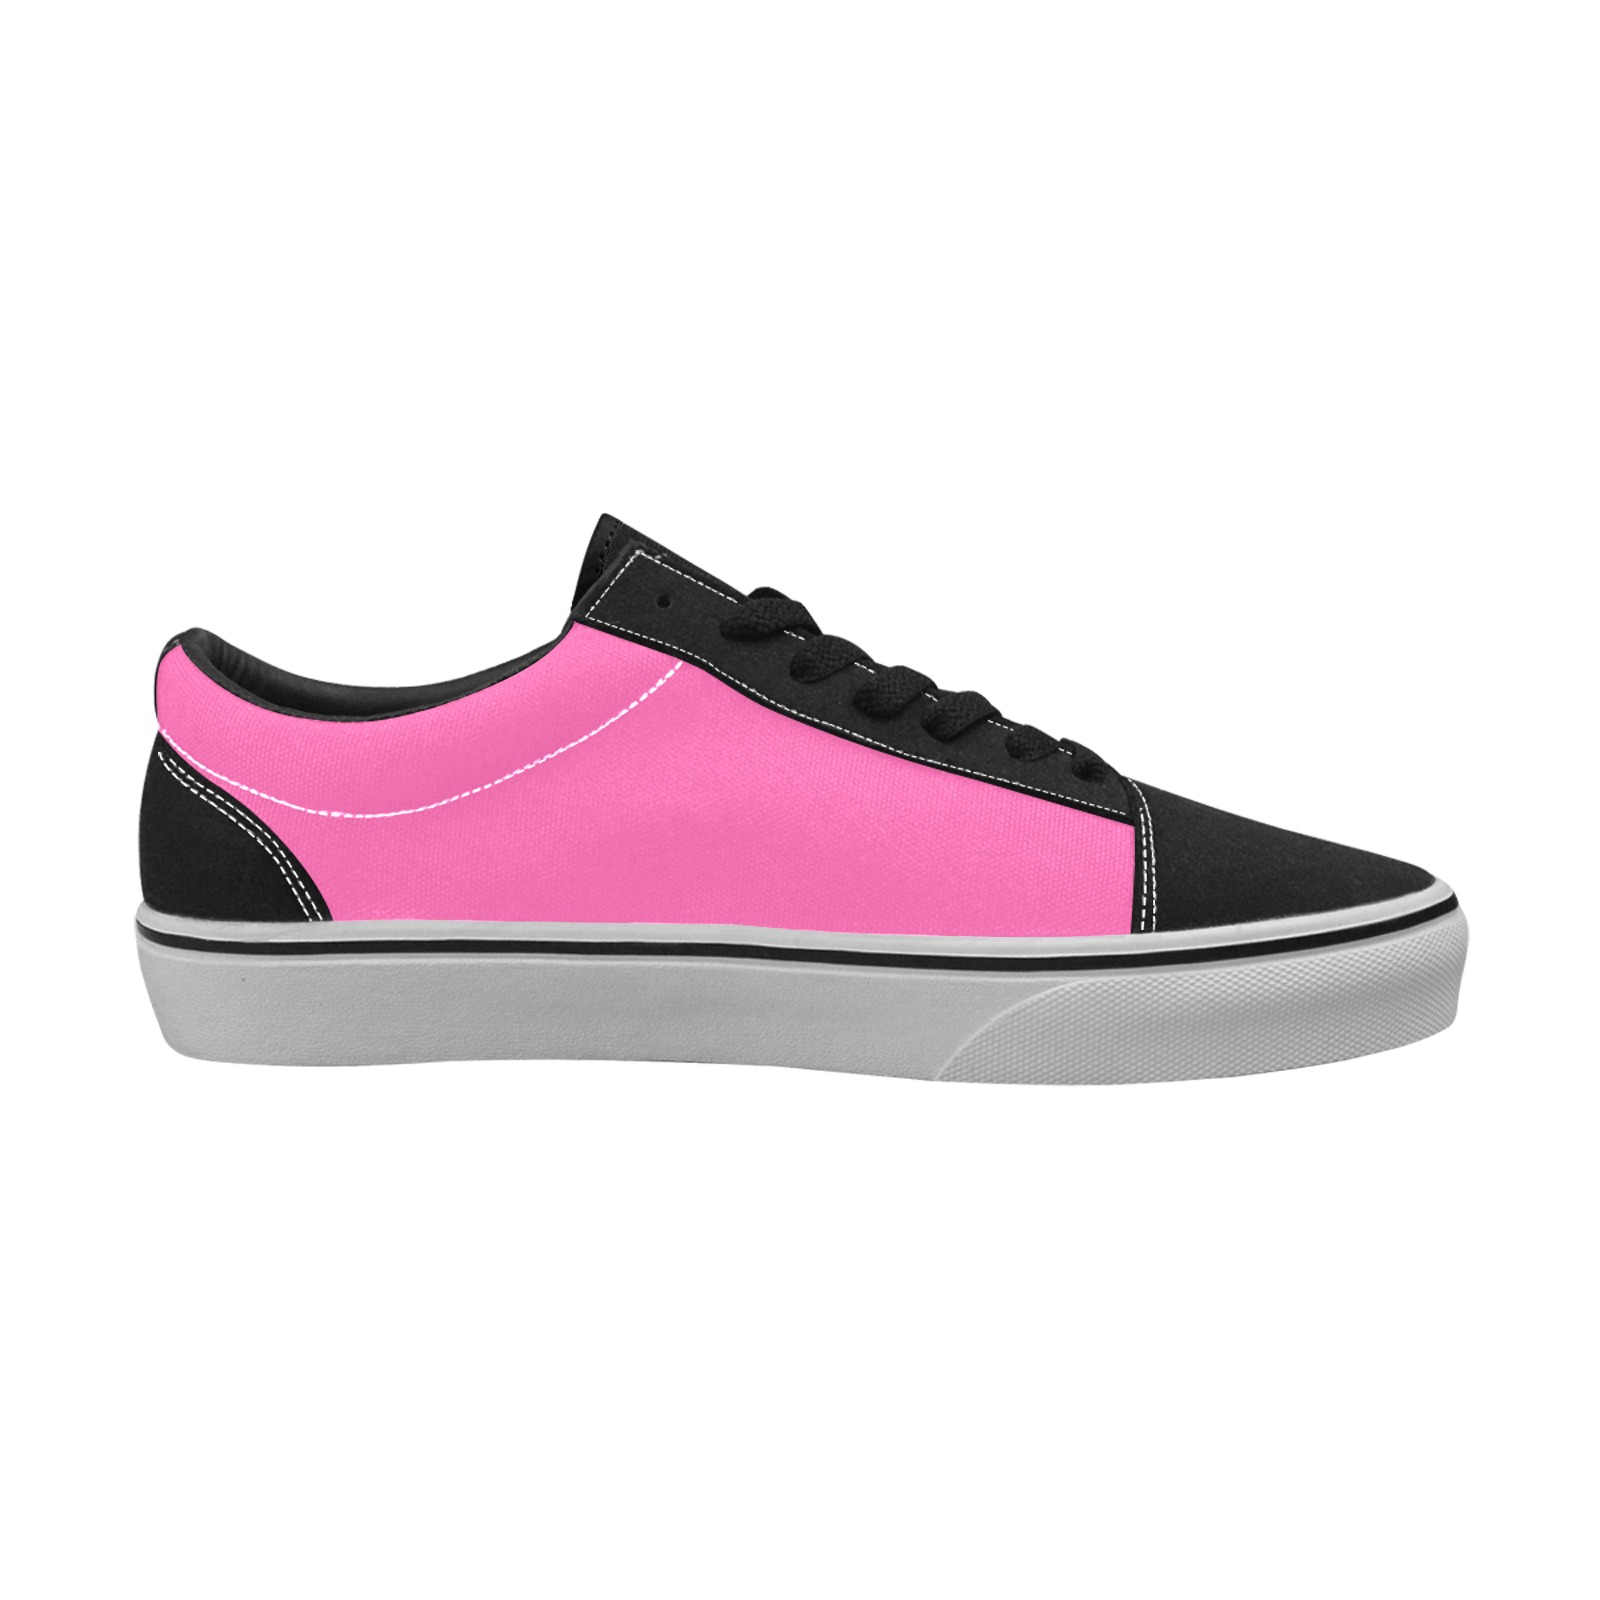 color hotpink Women's Low Top Skateboarding Shoes (Model E001-2)